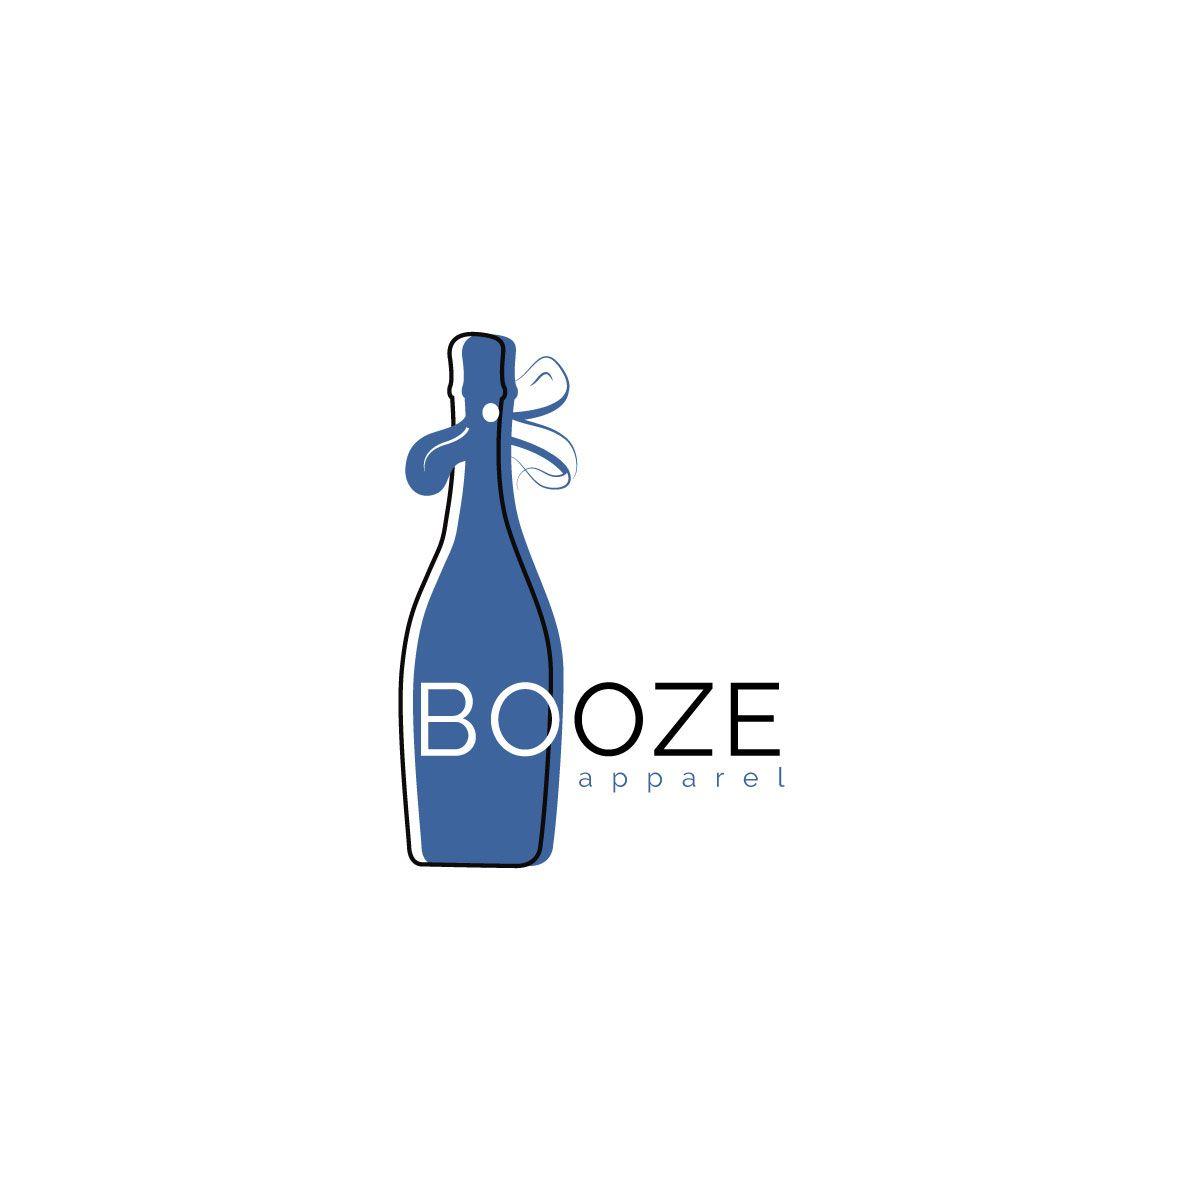 Booze Logo - Upmarket, Modern, Retail Logo Design for Booze Apparel by ...